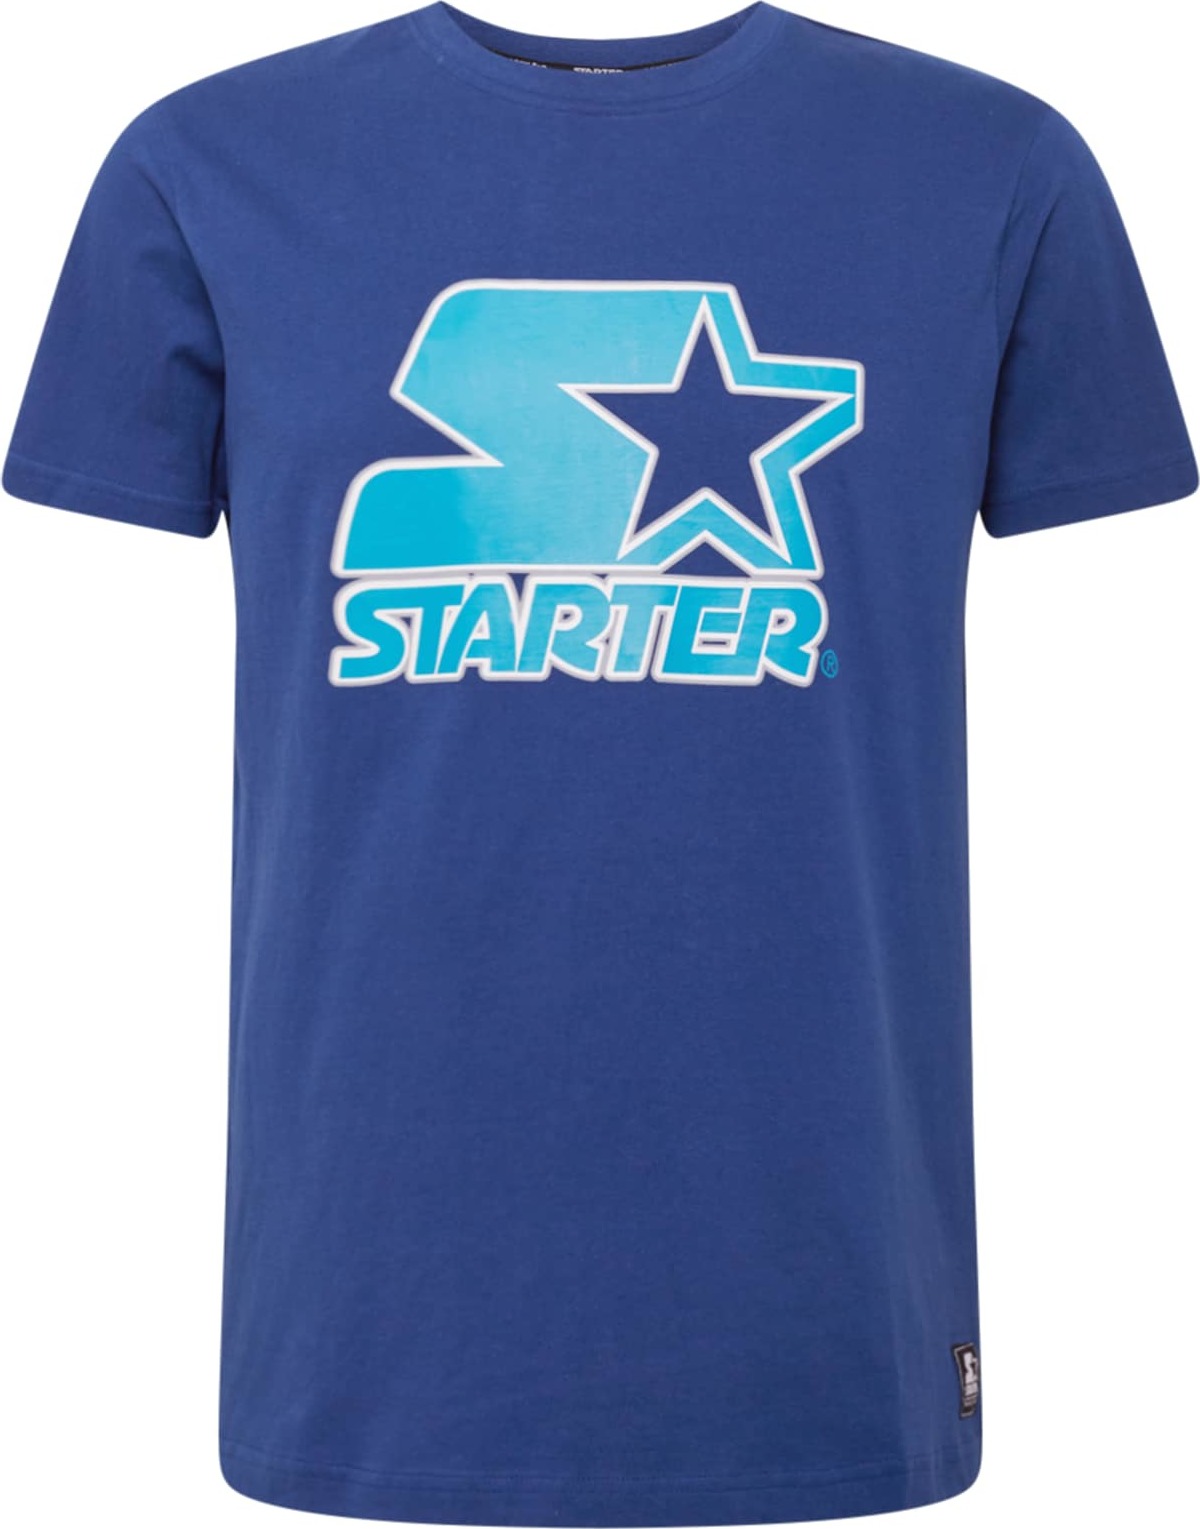 Starter Black Label Tričko námořnická modř / aqua modrá / bílá